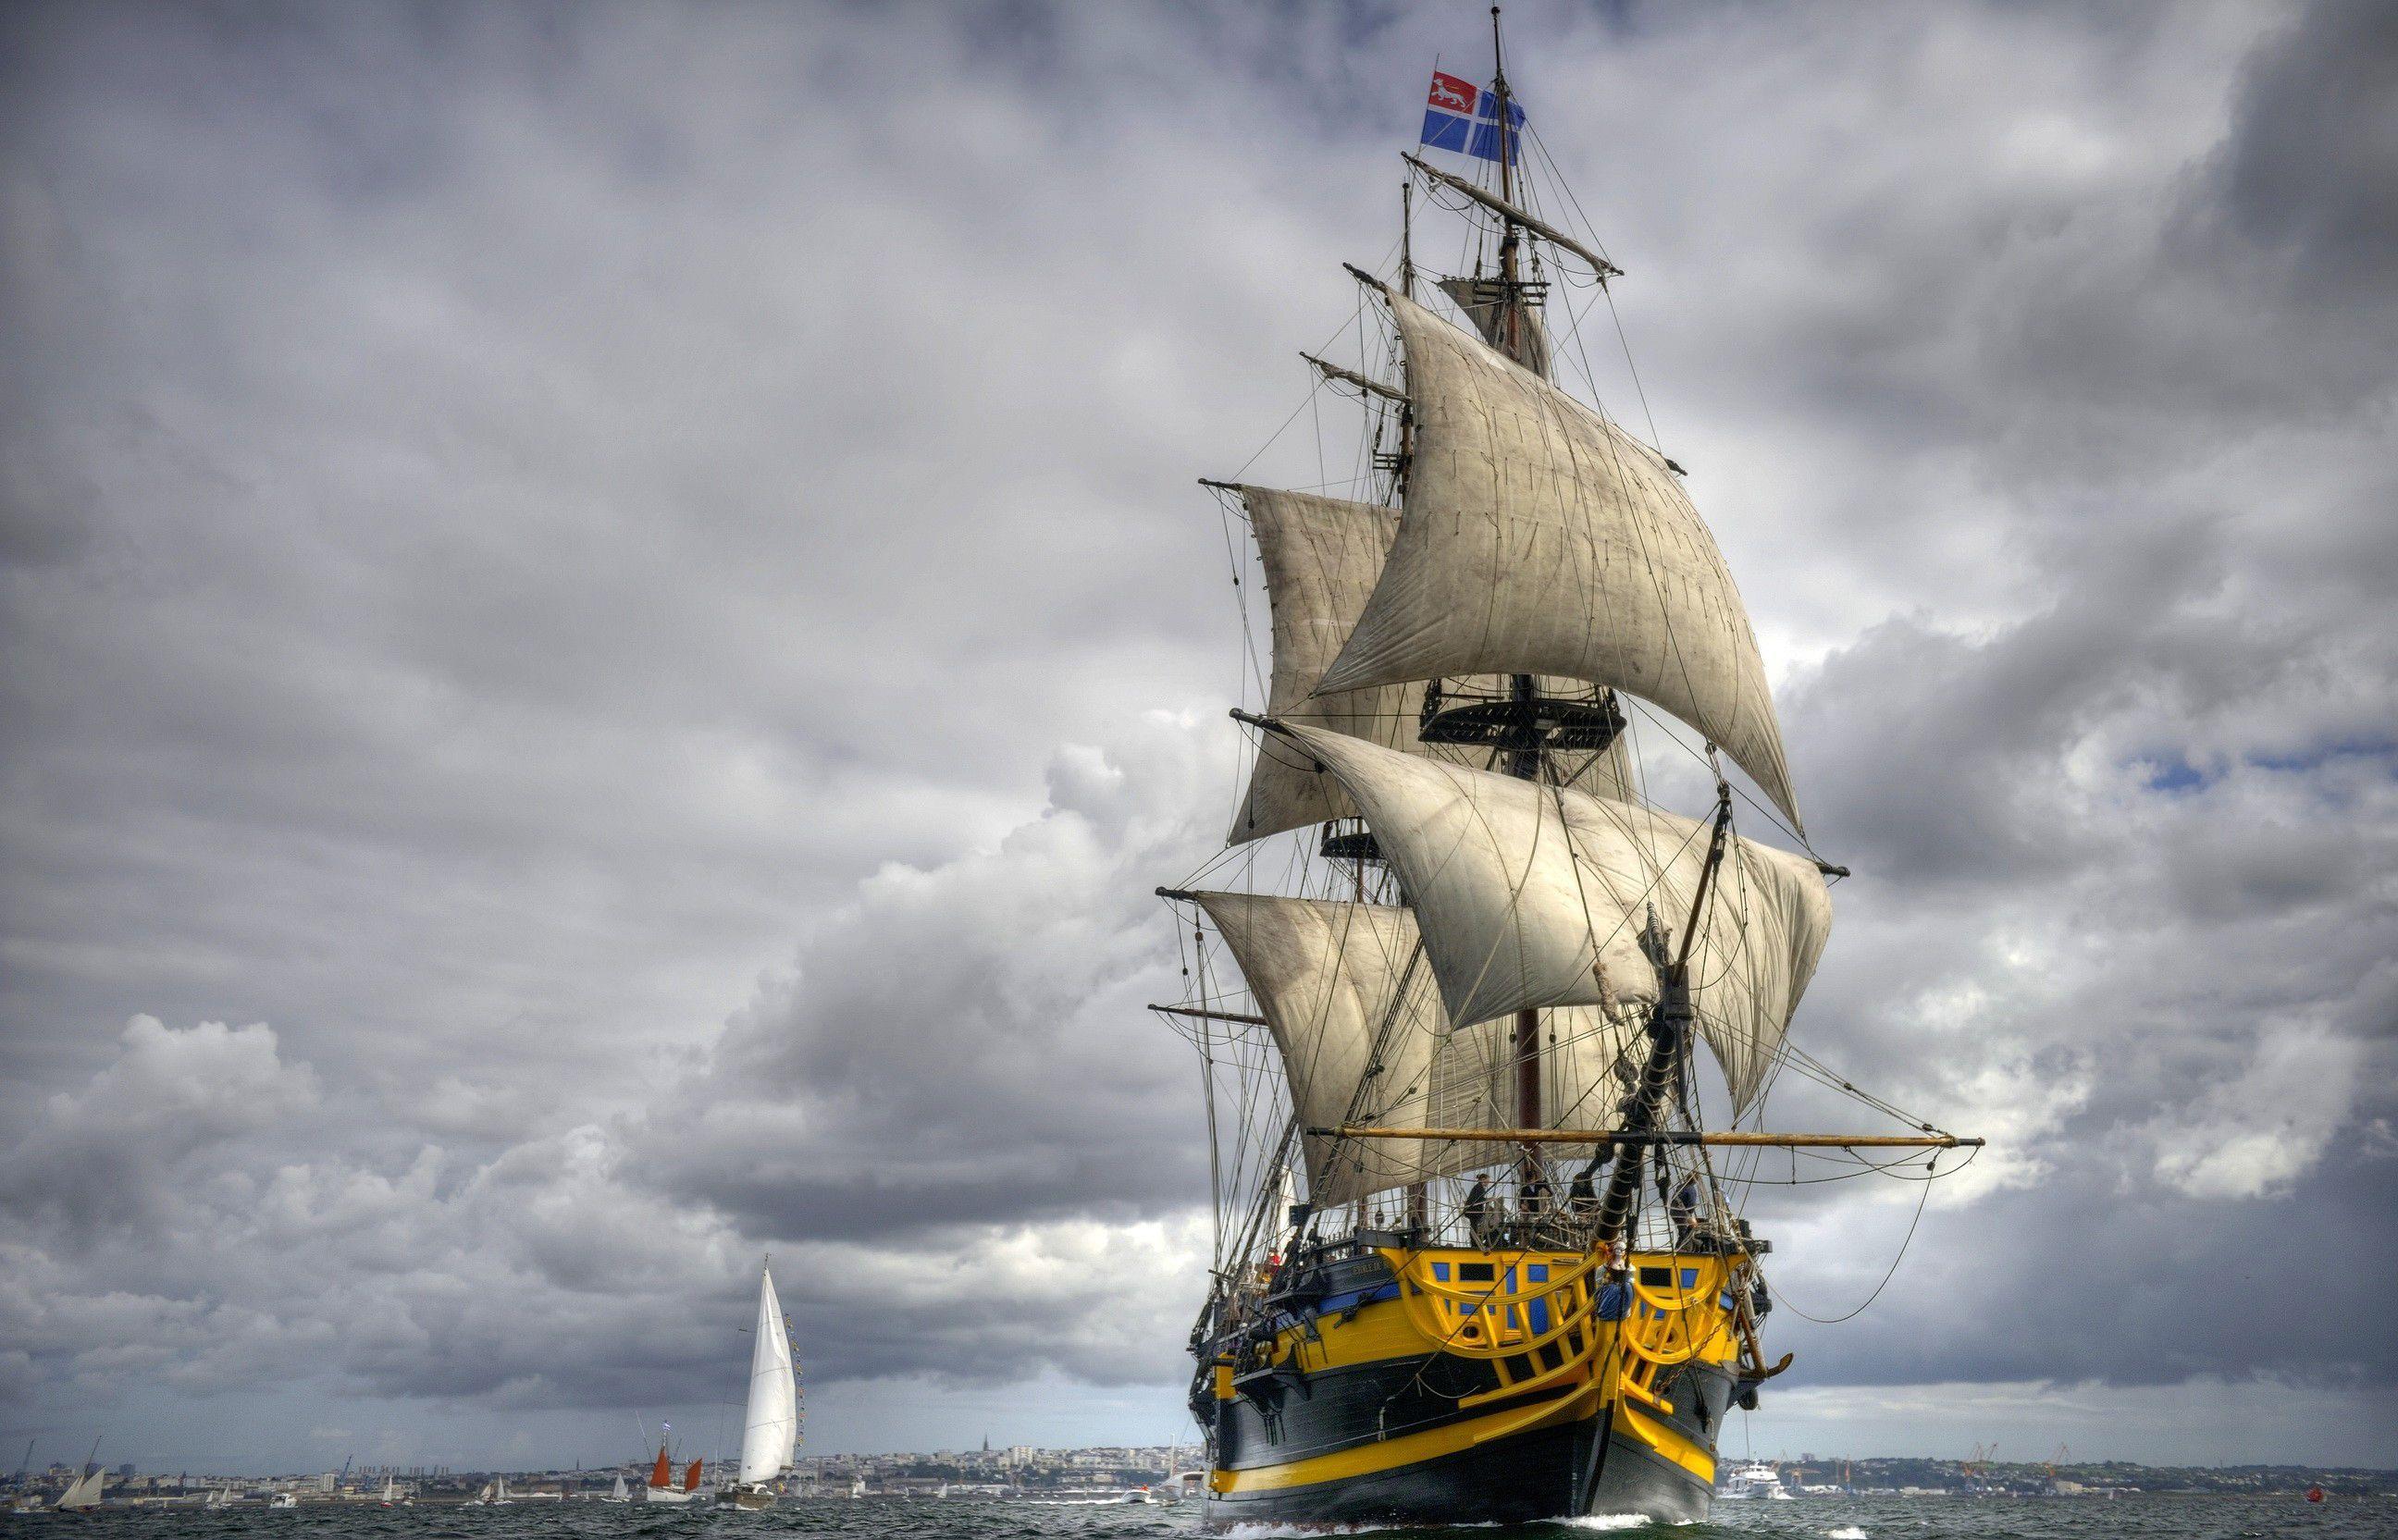 Sailing Ship Wallpaper Background Image. View, download